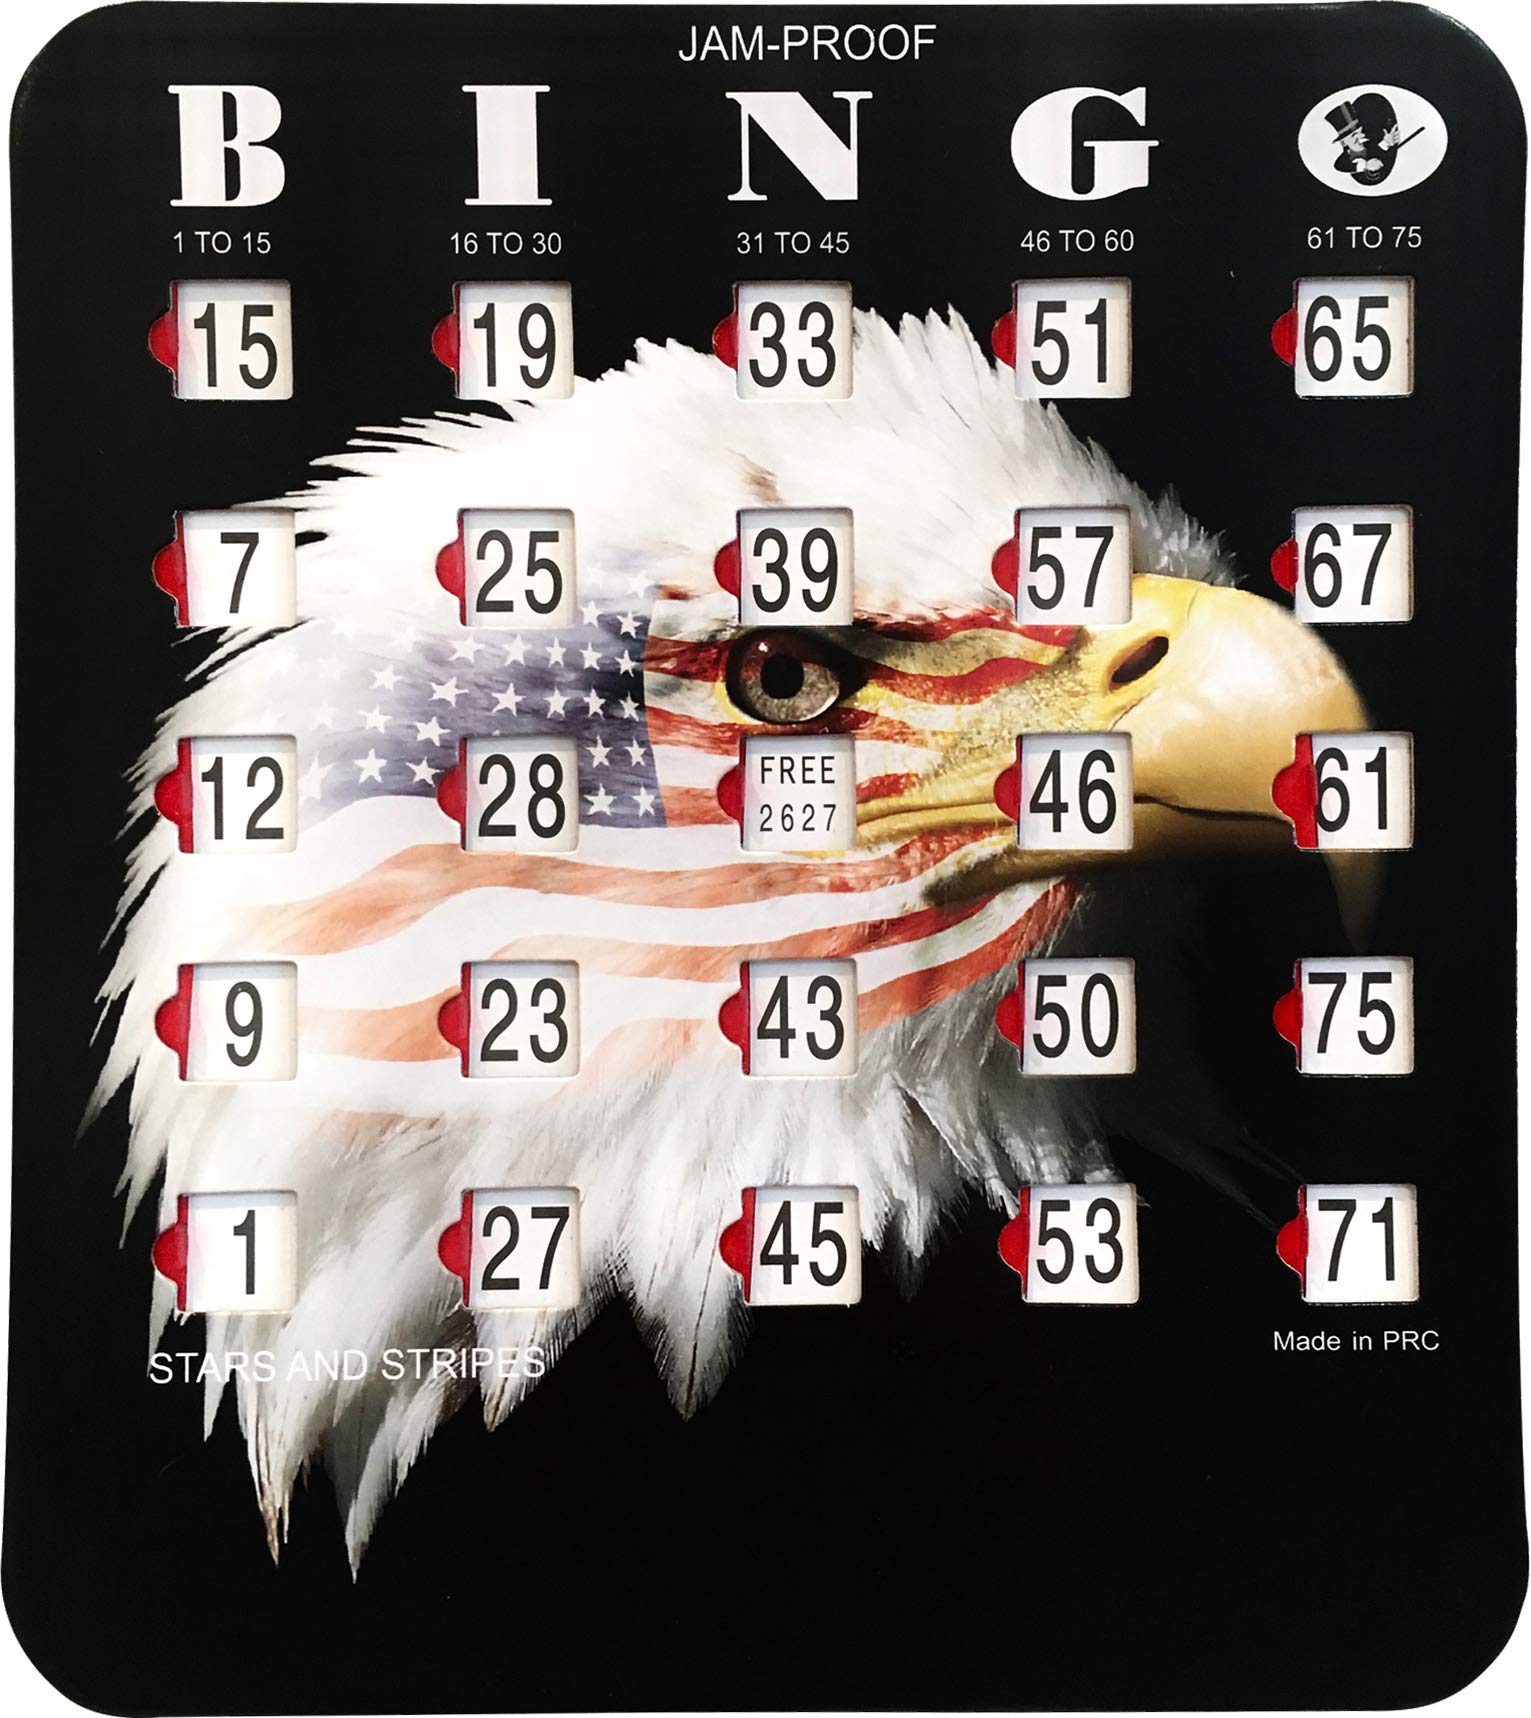 MR CHIPS Jam-Proof Fingertip Bingo Cards with Sliding Windows - Stars & Stripes Design